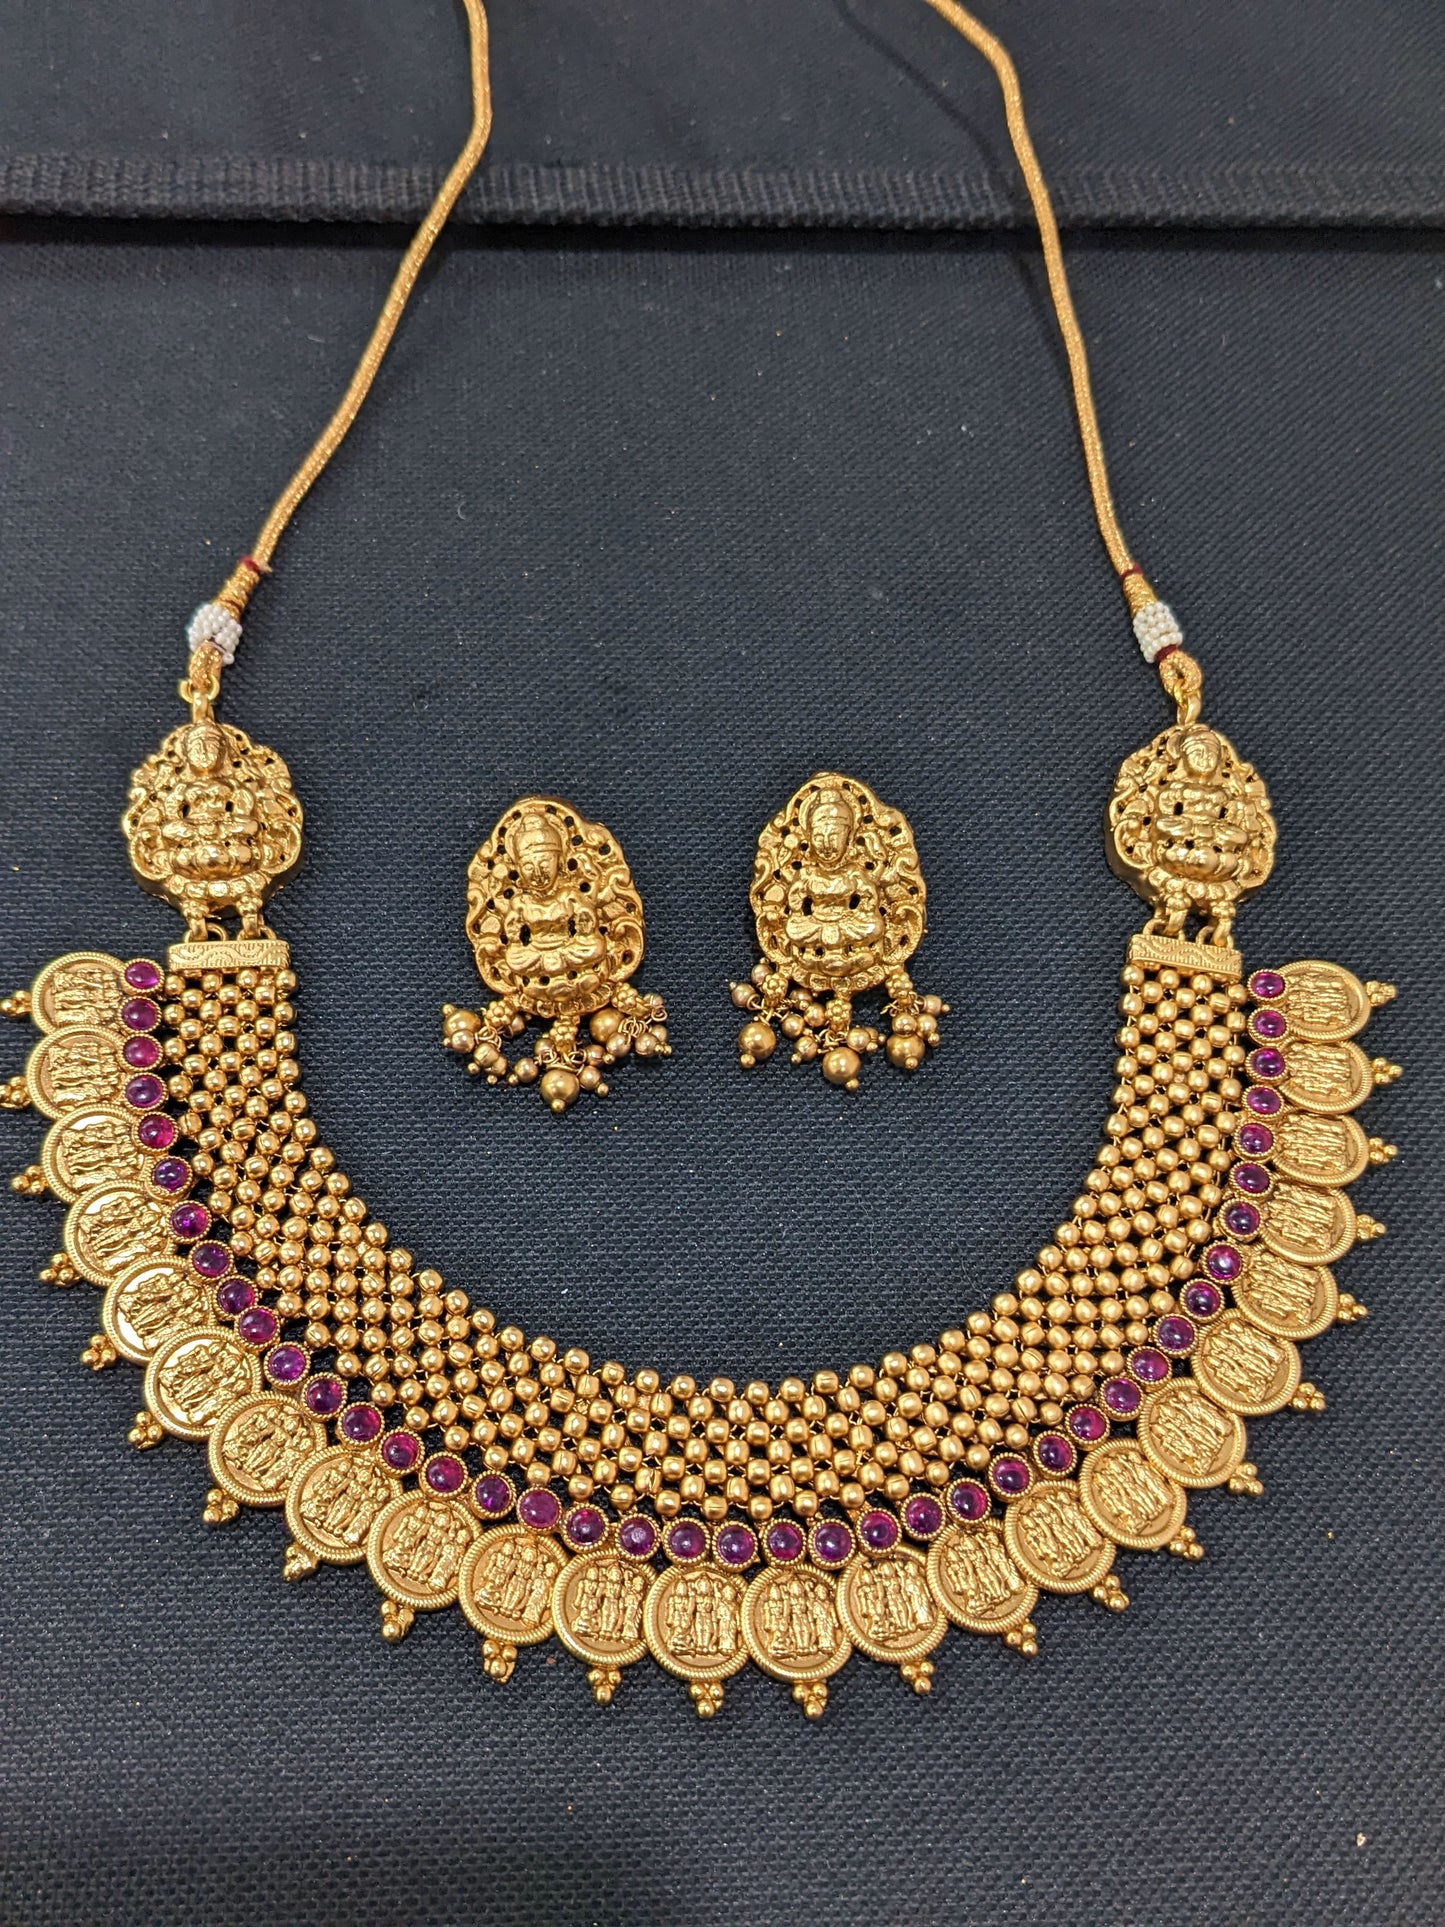 Ram Parivar Broad Choker Necklace and Earrings set